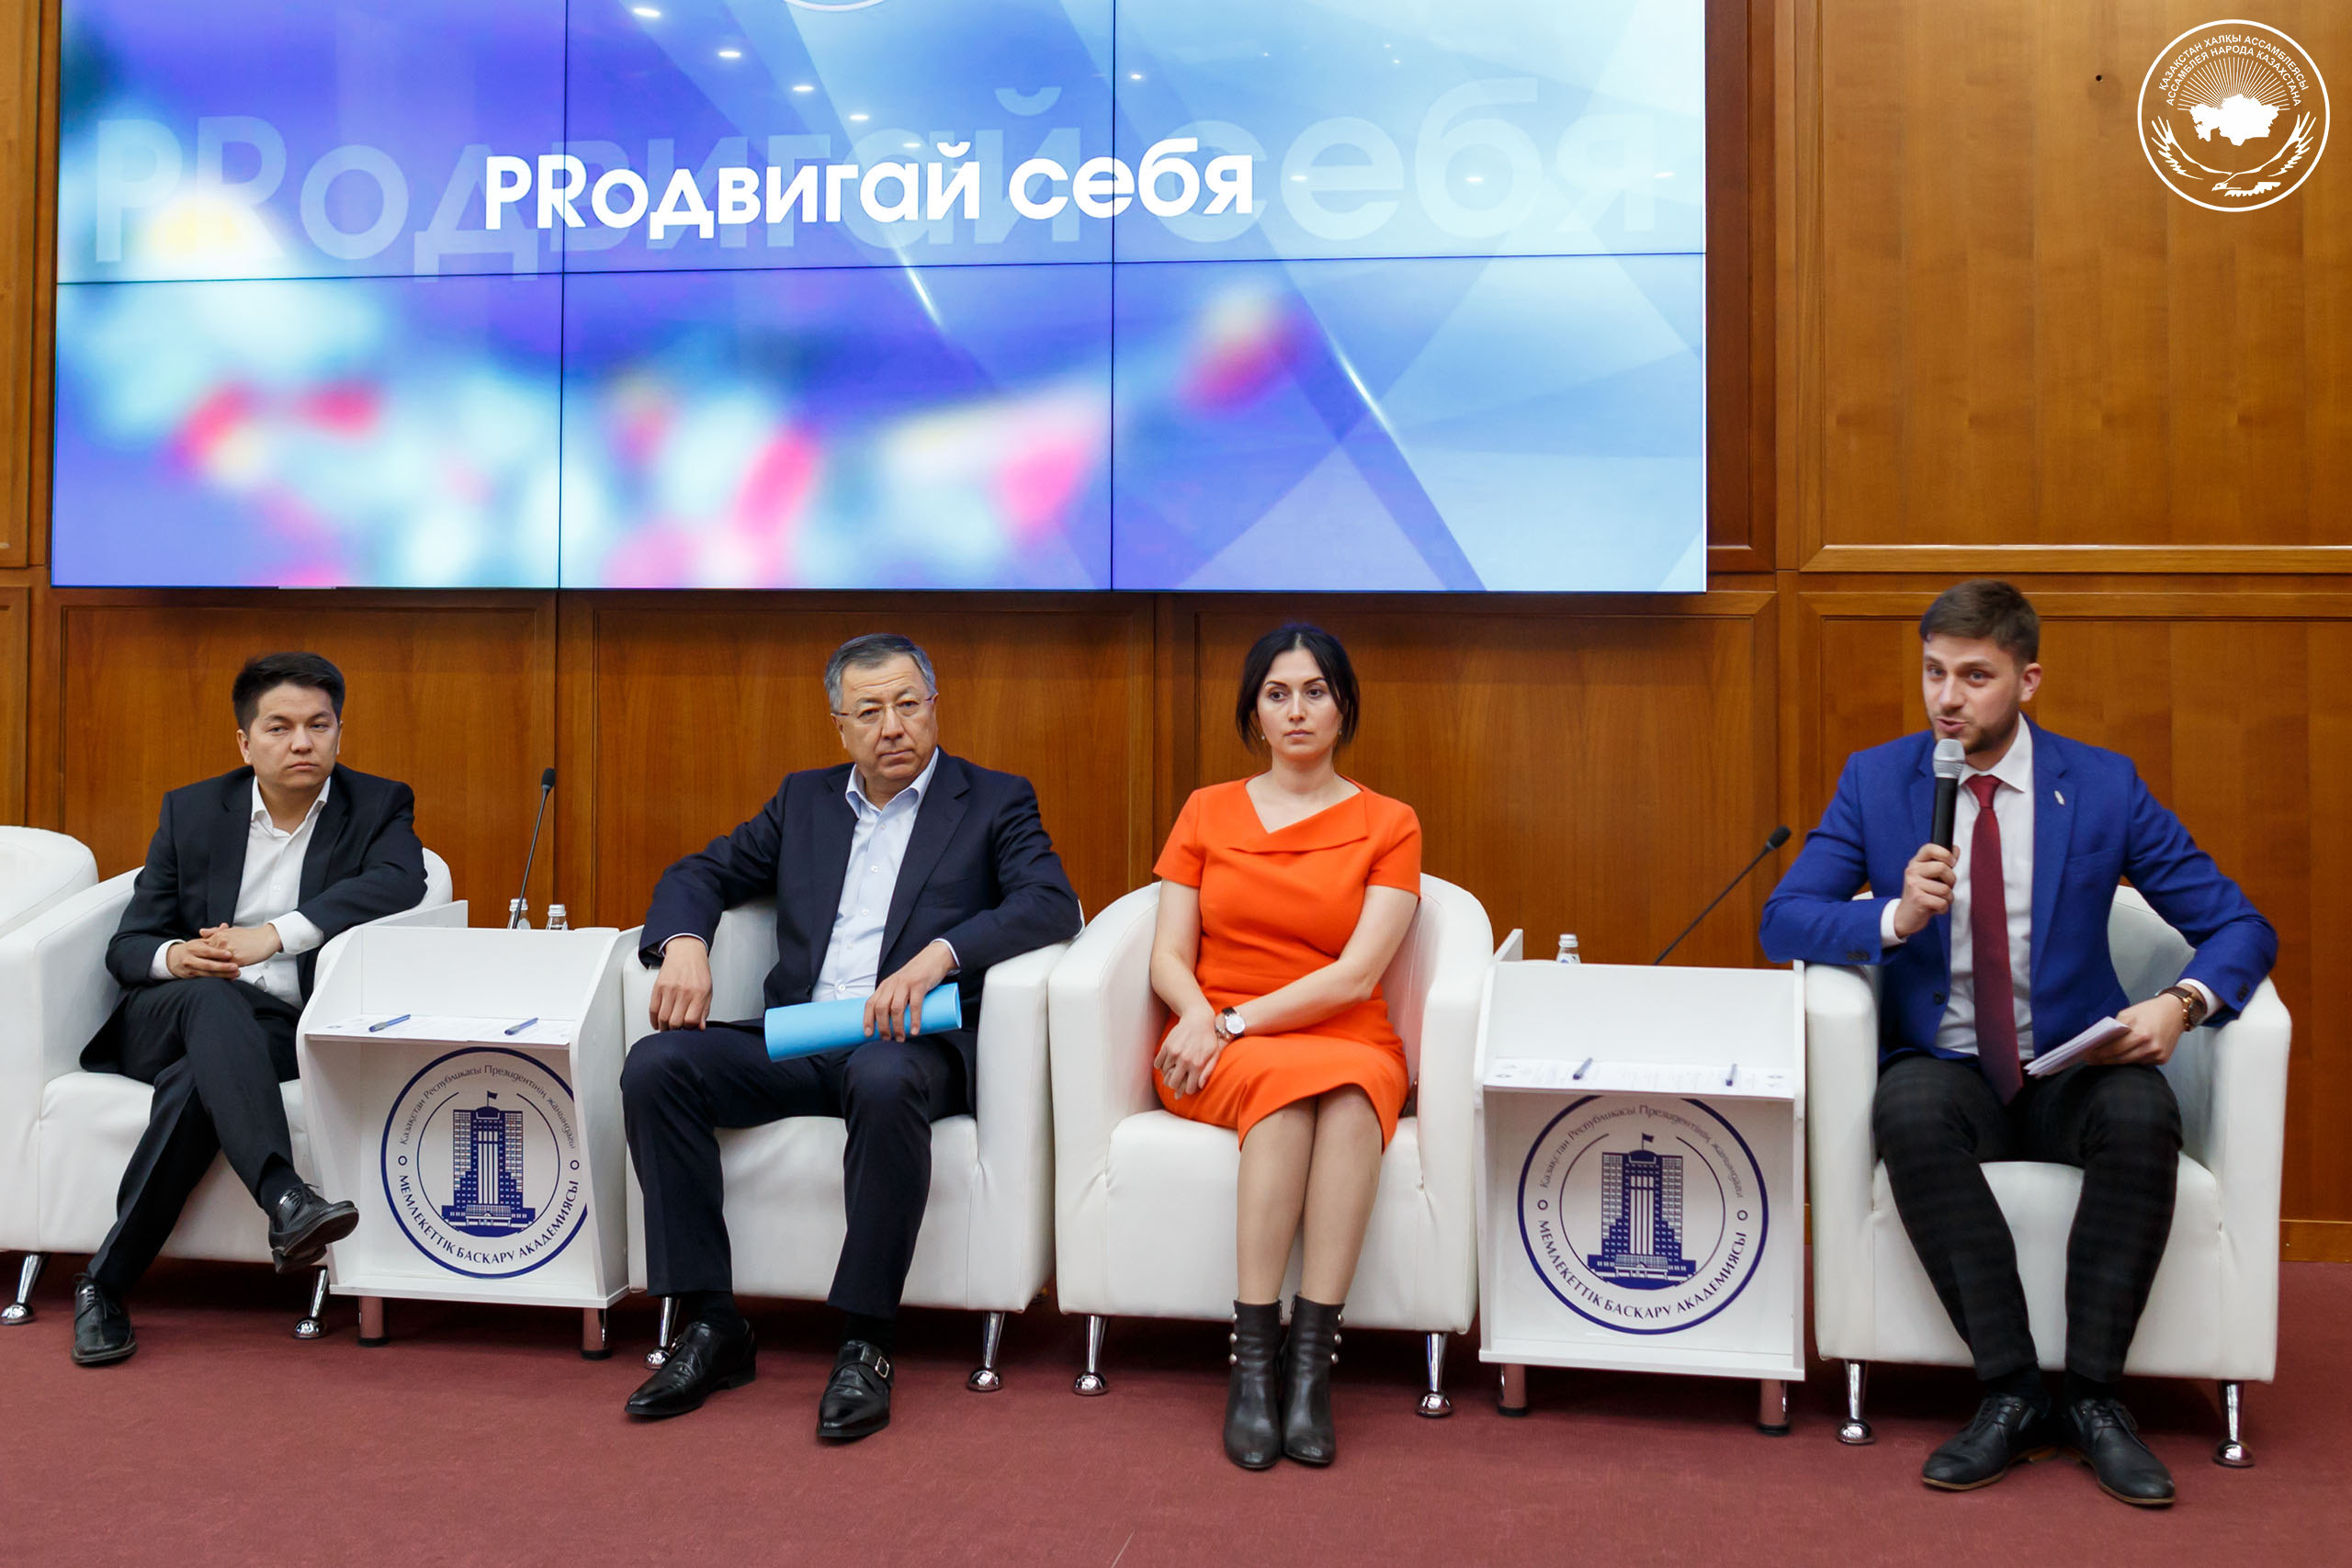 "PRodvigay sebya" training at APA under President RK with Zh. Tuimebayev's participation